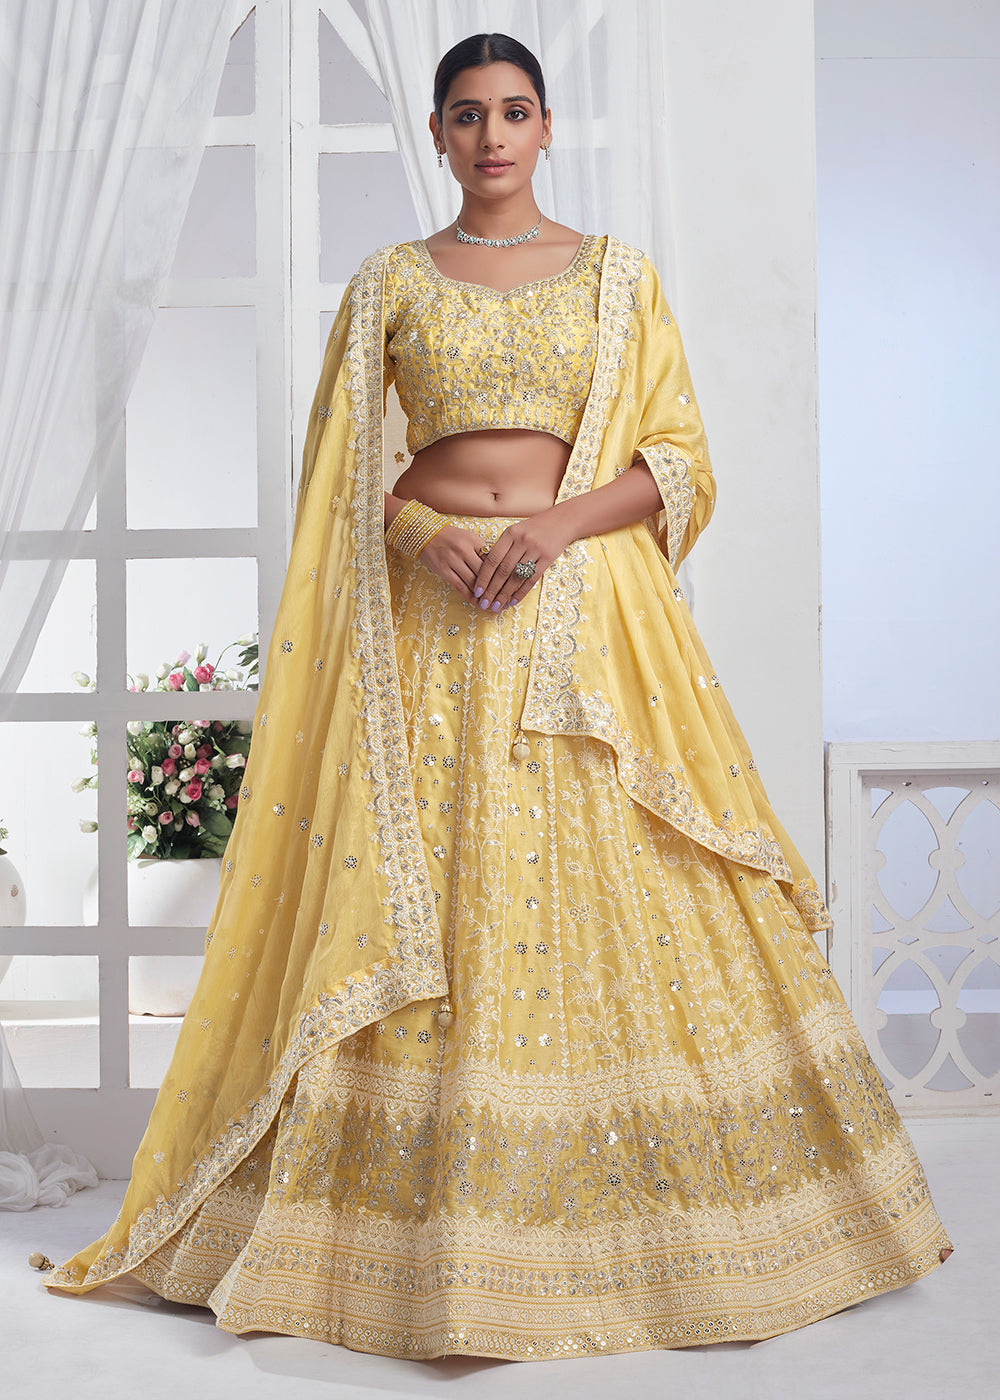 Buy Now Yellow Designer Style Embroidered Wedding Lehenga Choli Online in USA, UK, Canada & Worldwide at Empress Clothing.